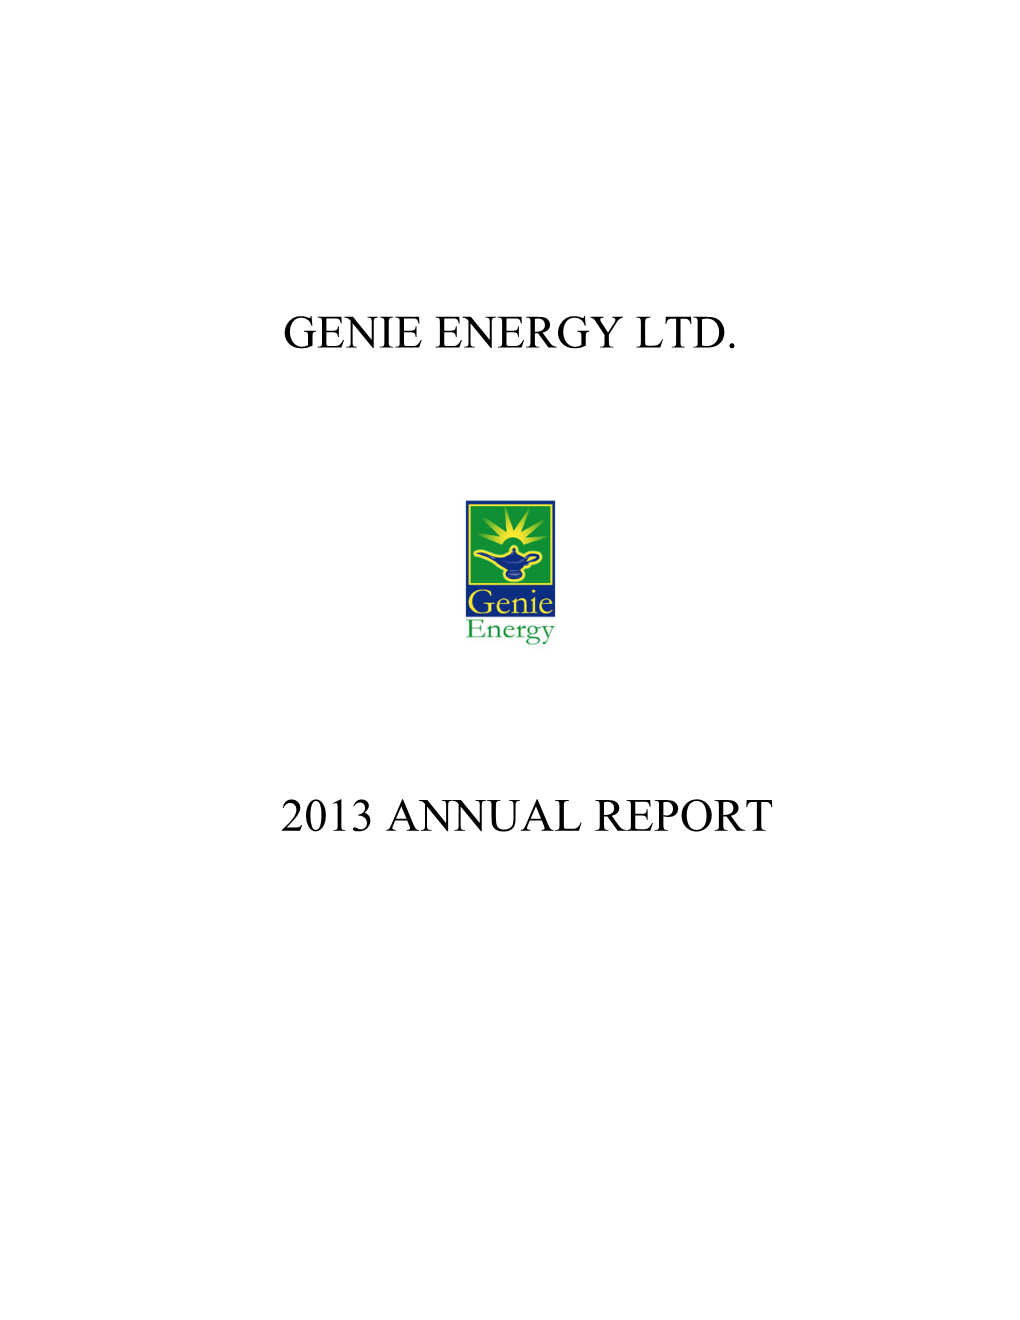 Genie Energy Ltd. 2013 Annual Report